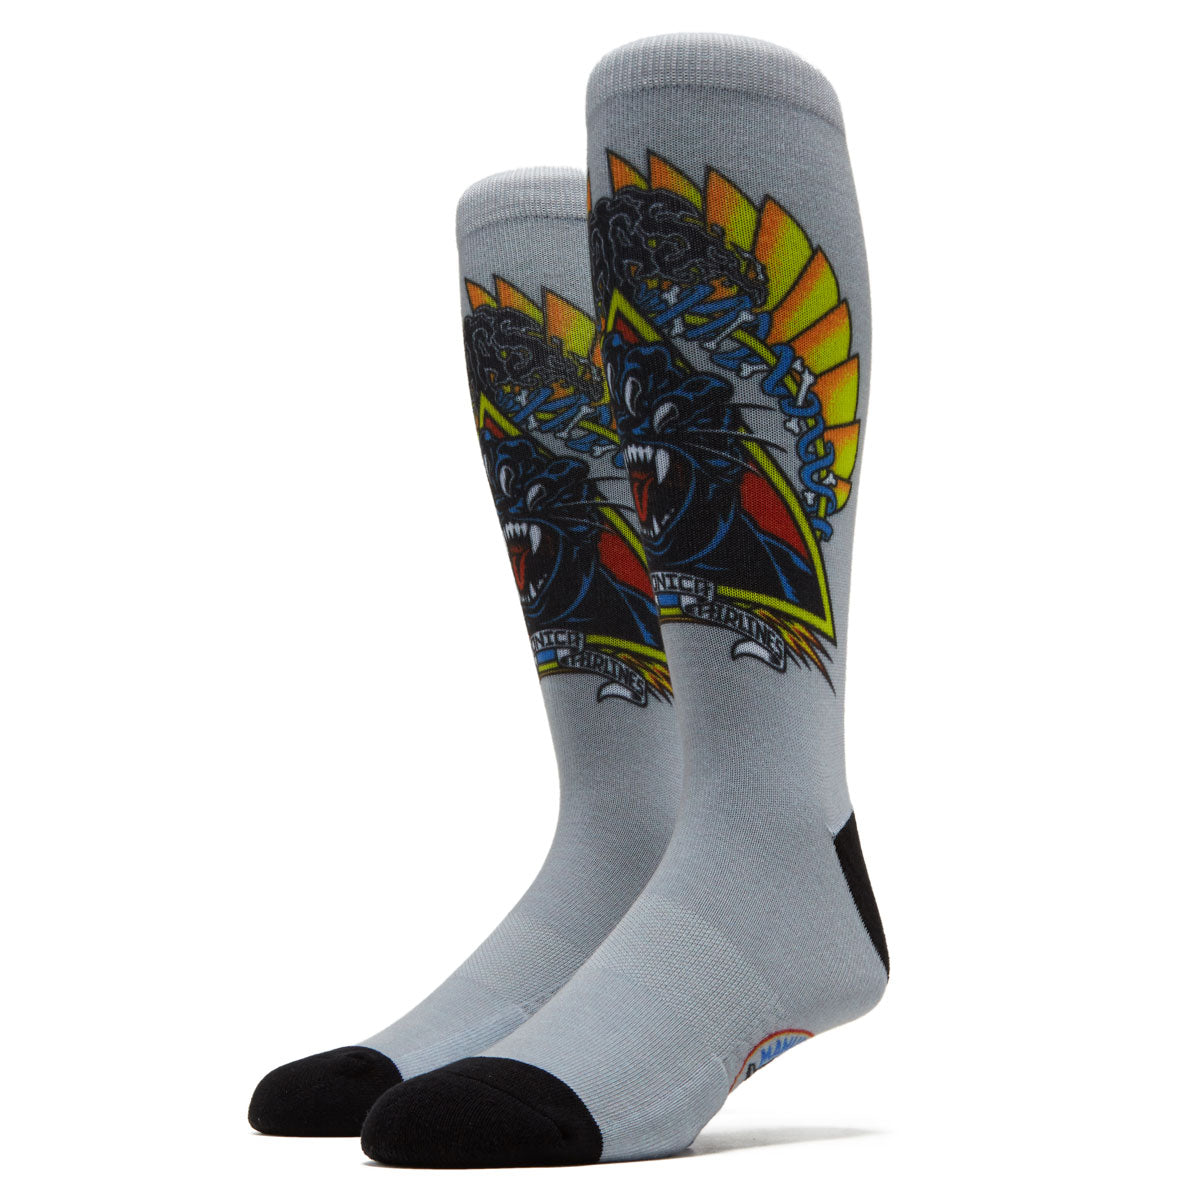 Santa Cruz Natas Screaming Panther Dress Socks - Grey image 1